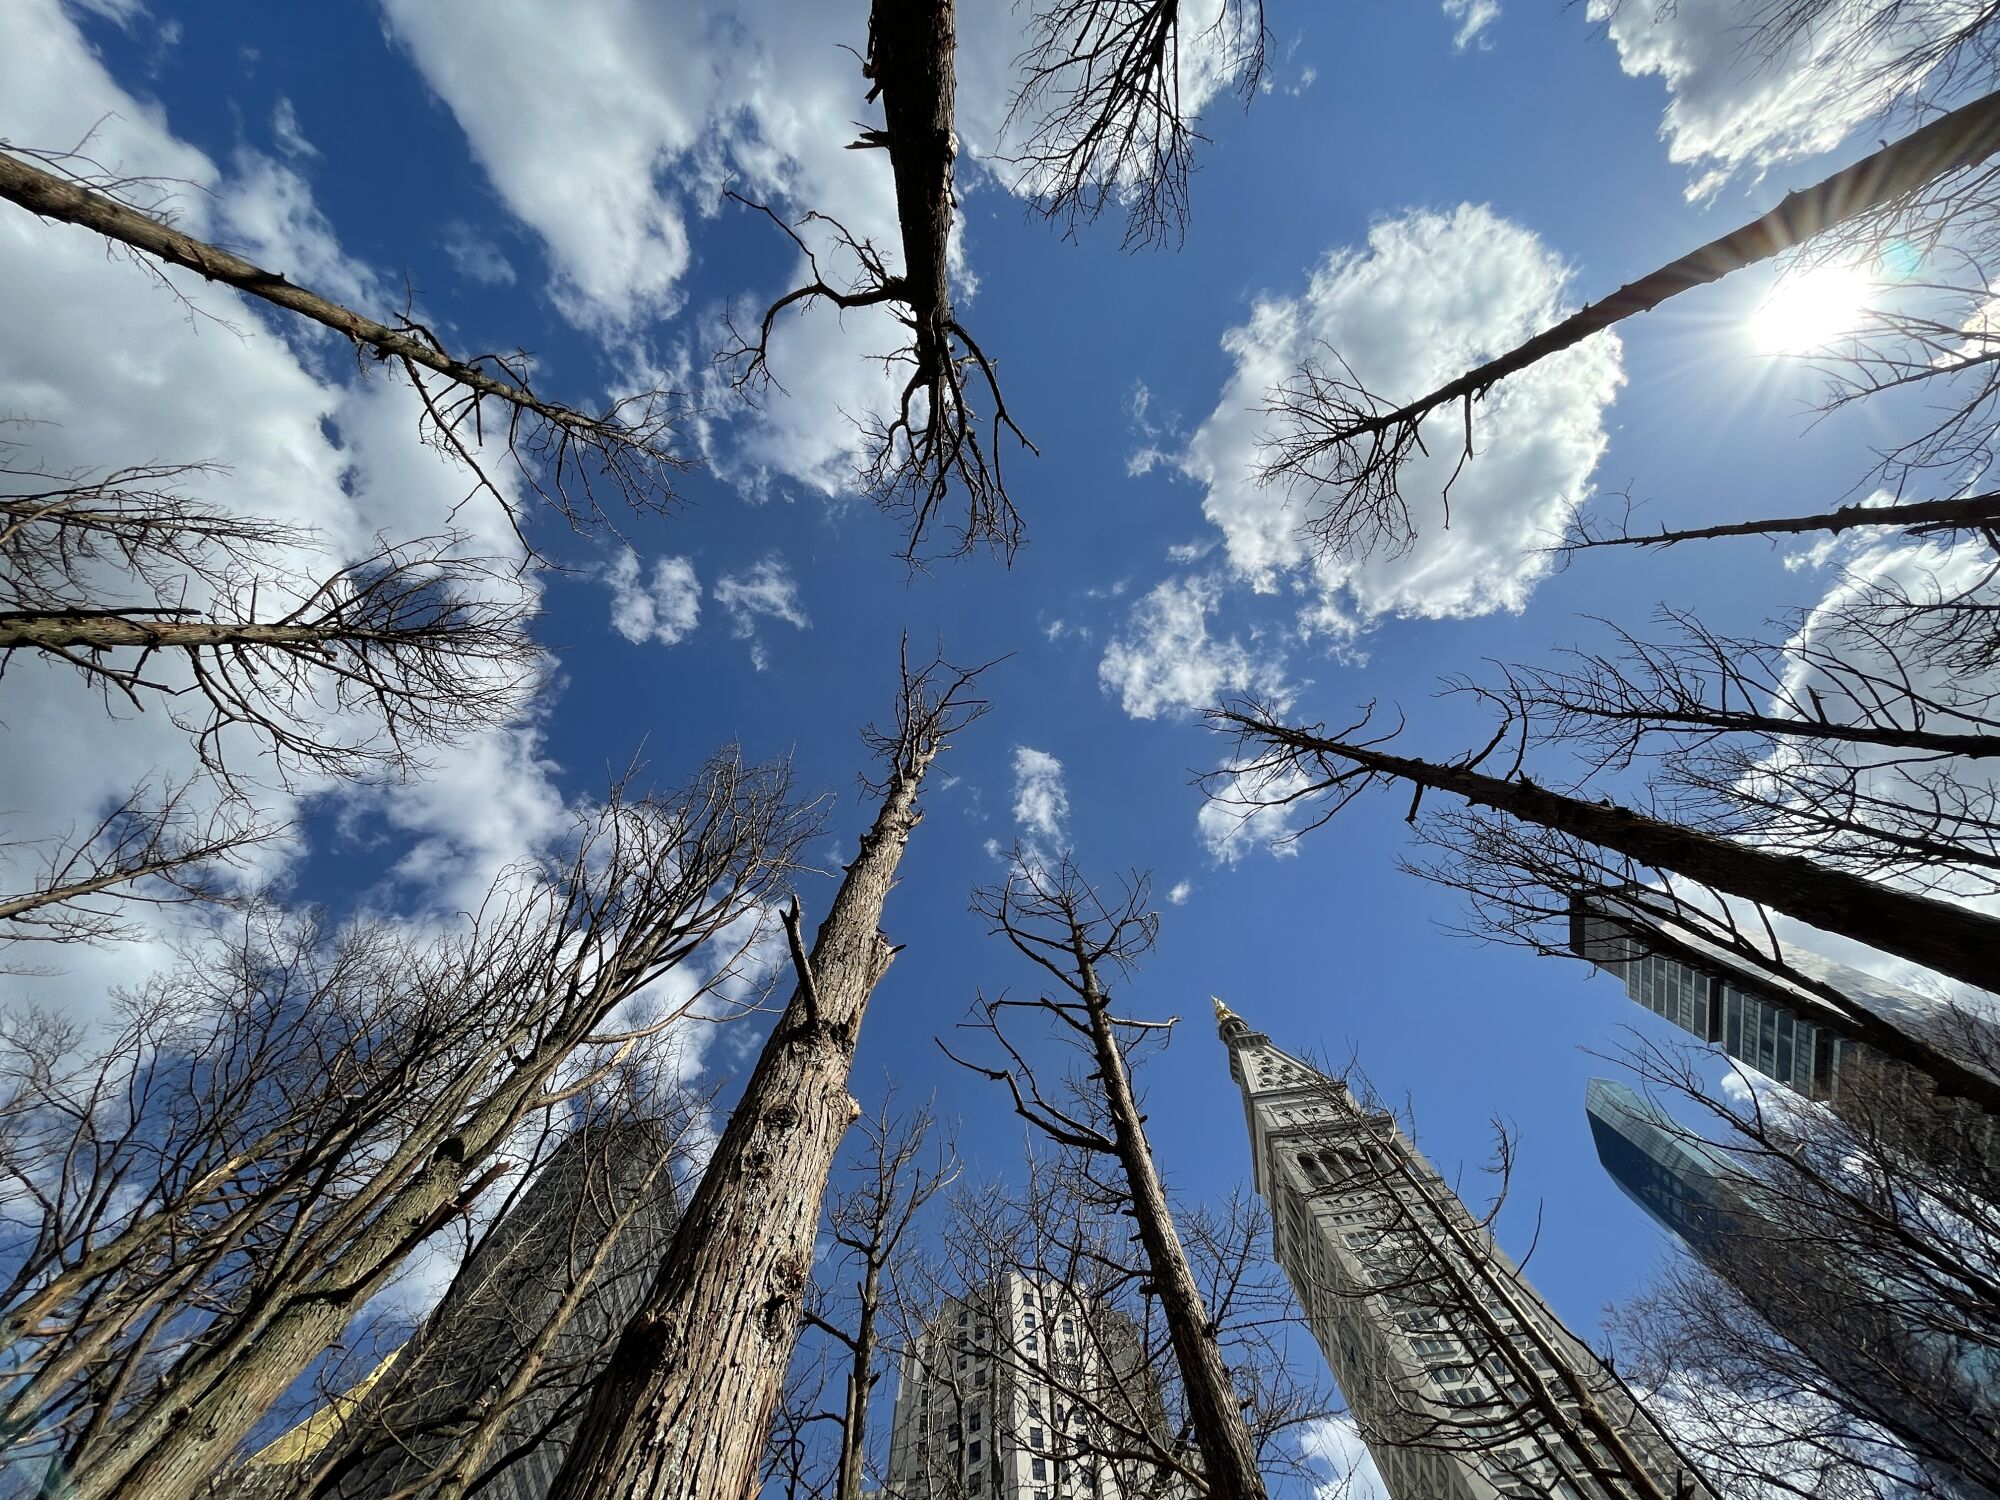 An upward view toward the sky shows the deadened branches of dozens of Atlantic cedars.